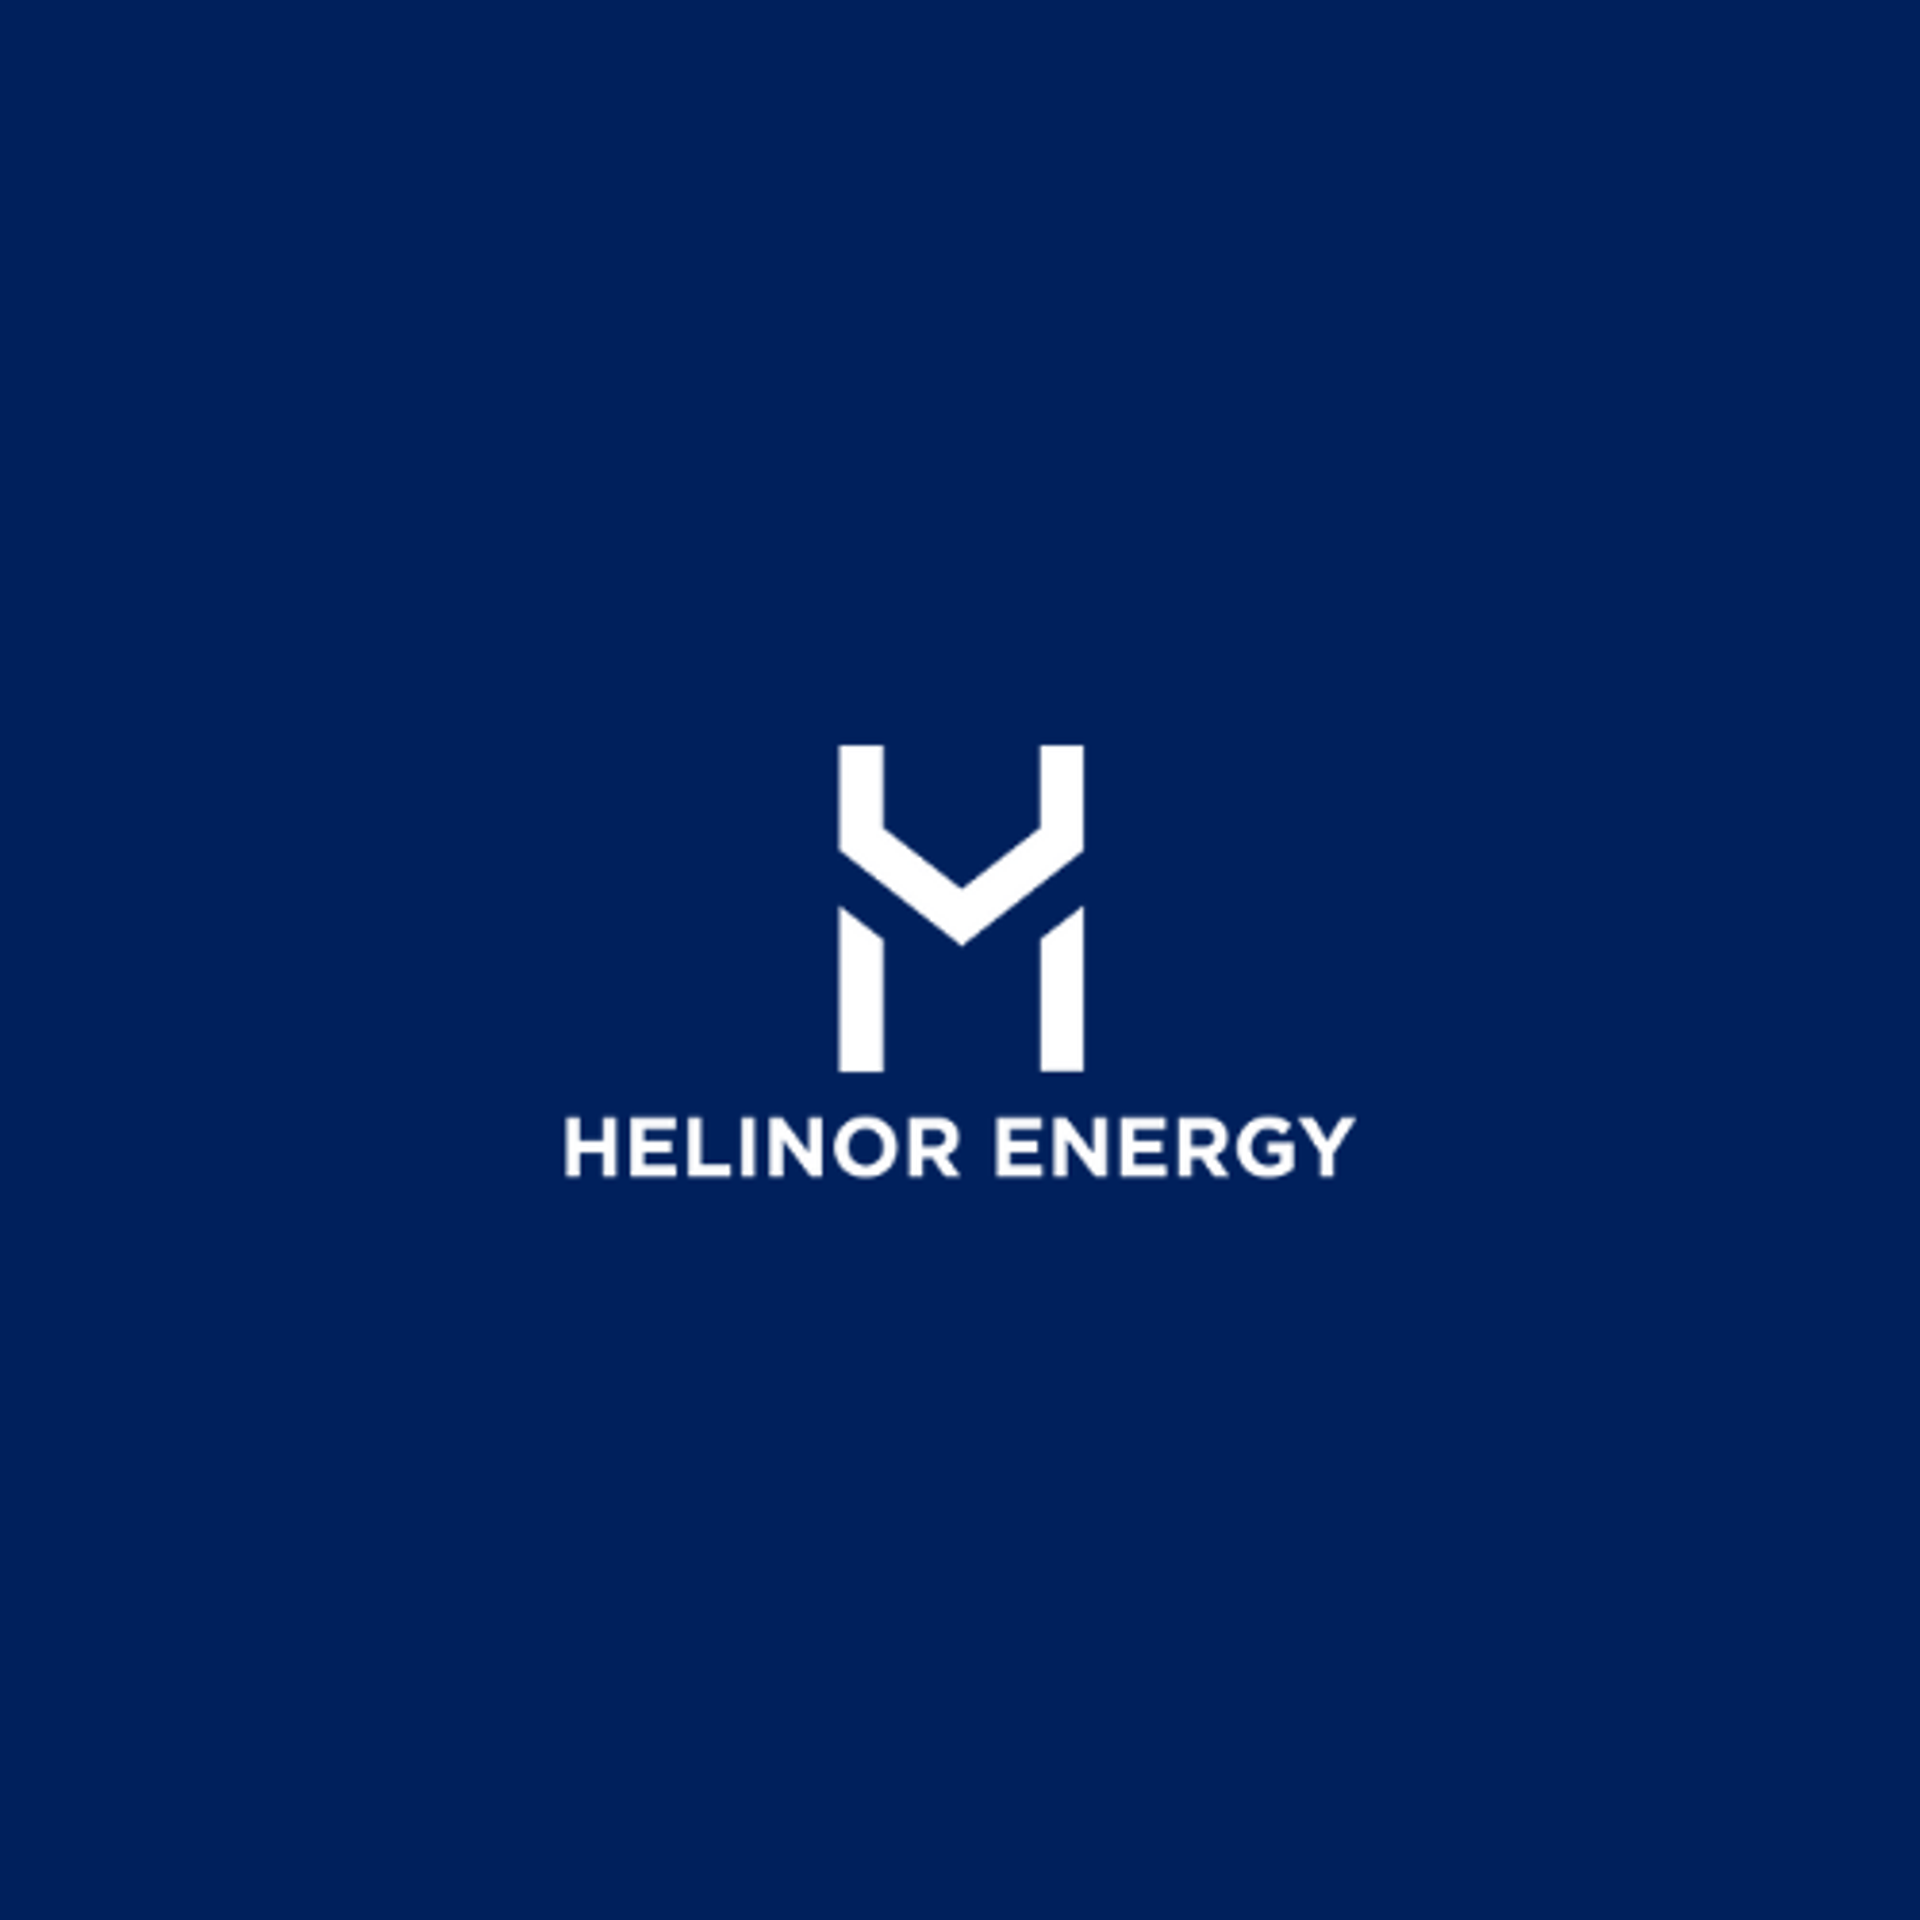 Helinor logo